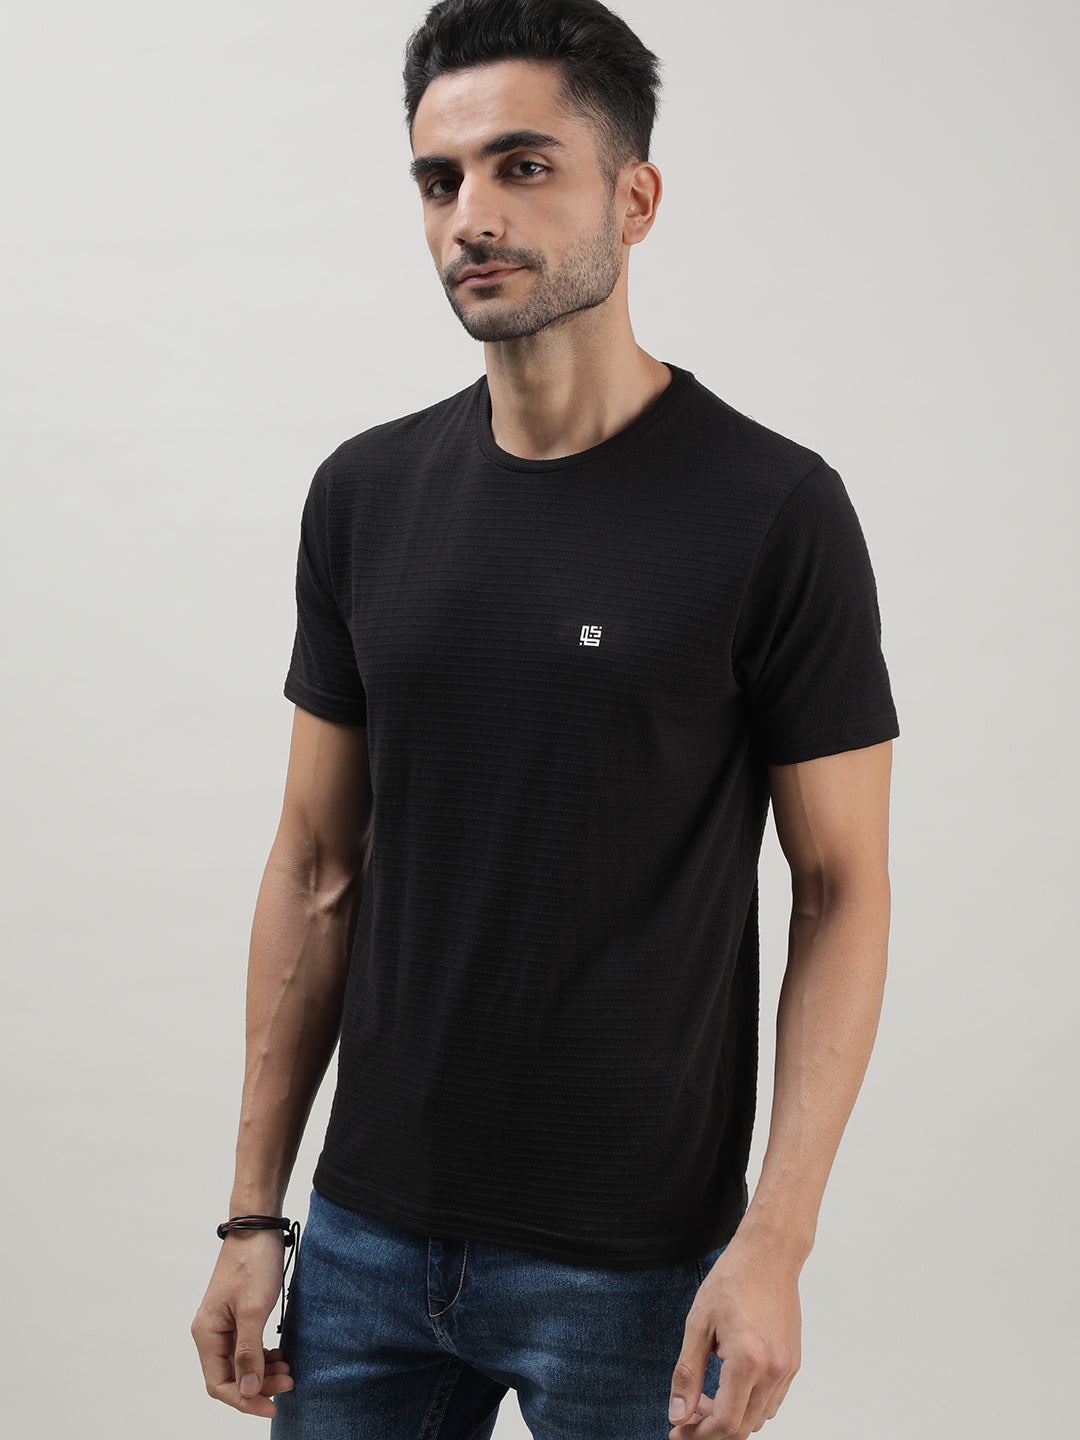 Black Solid Crew Neck T-shirt for Men